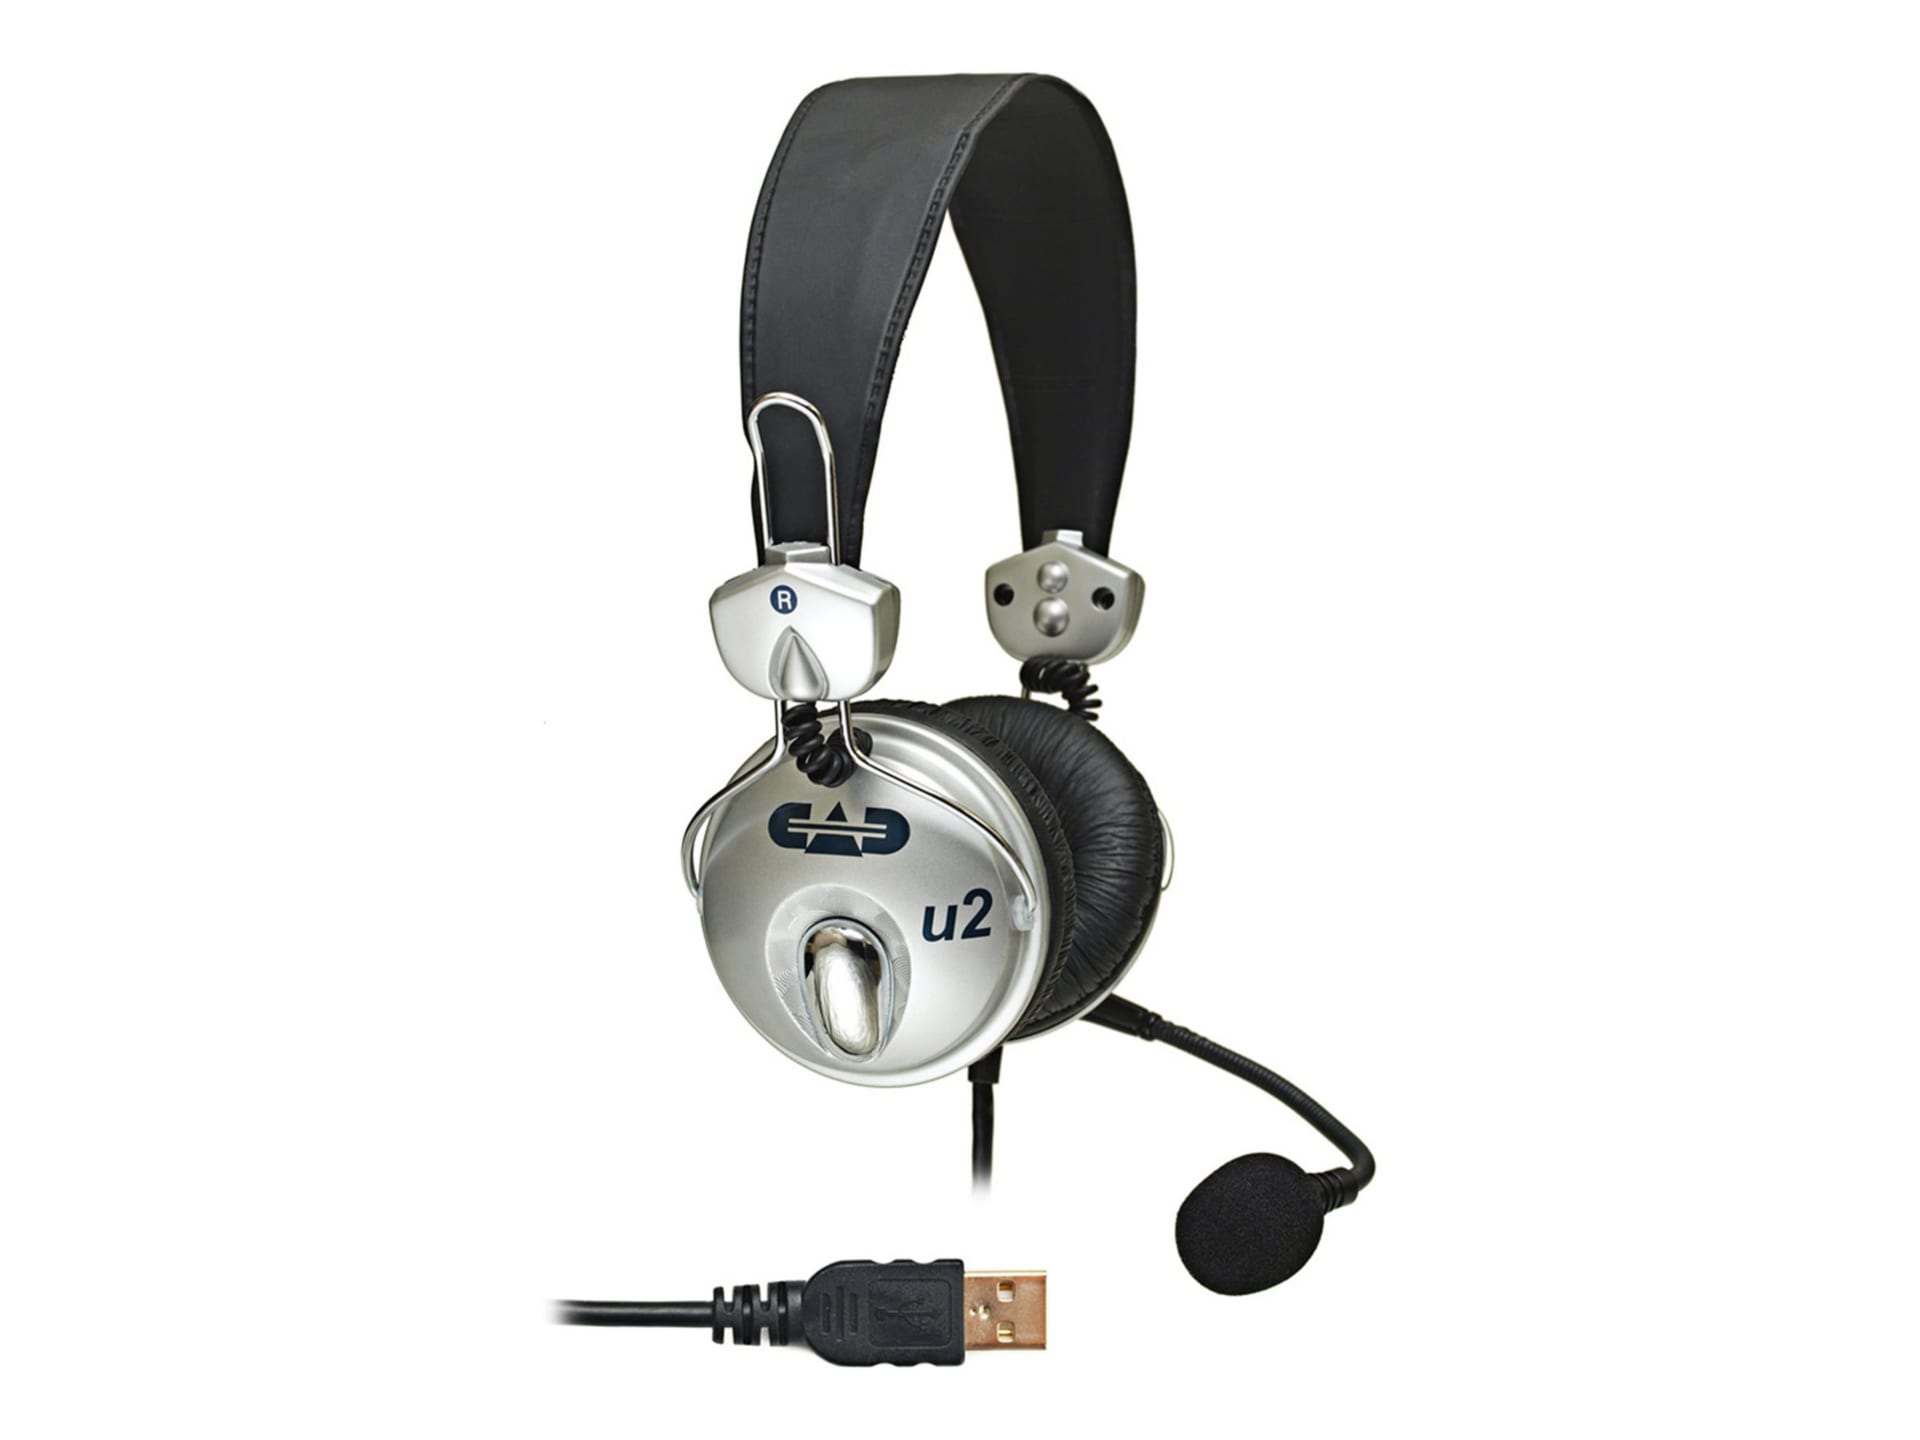 CAD Audio U2 - headset